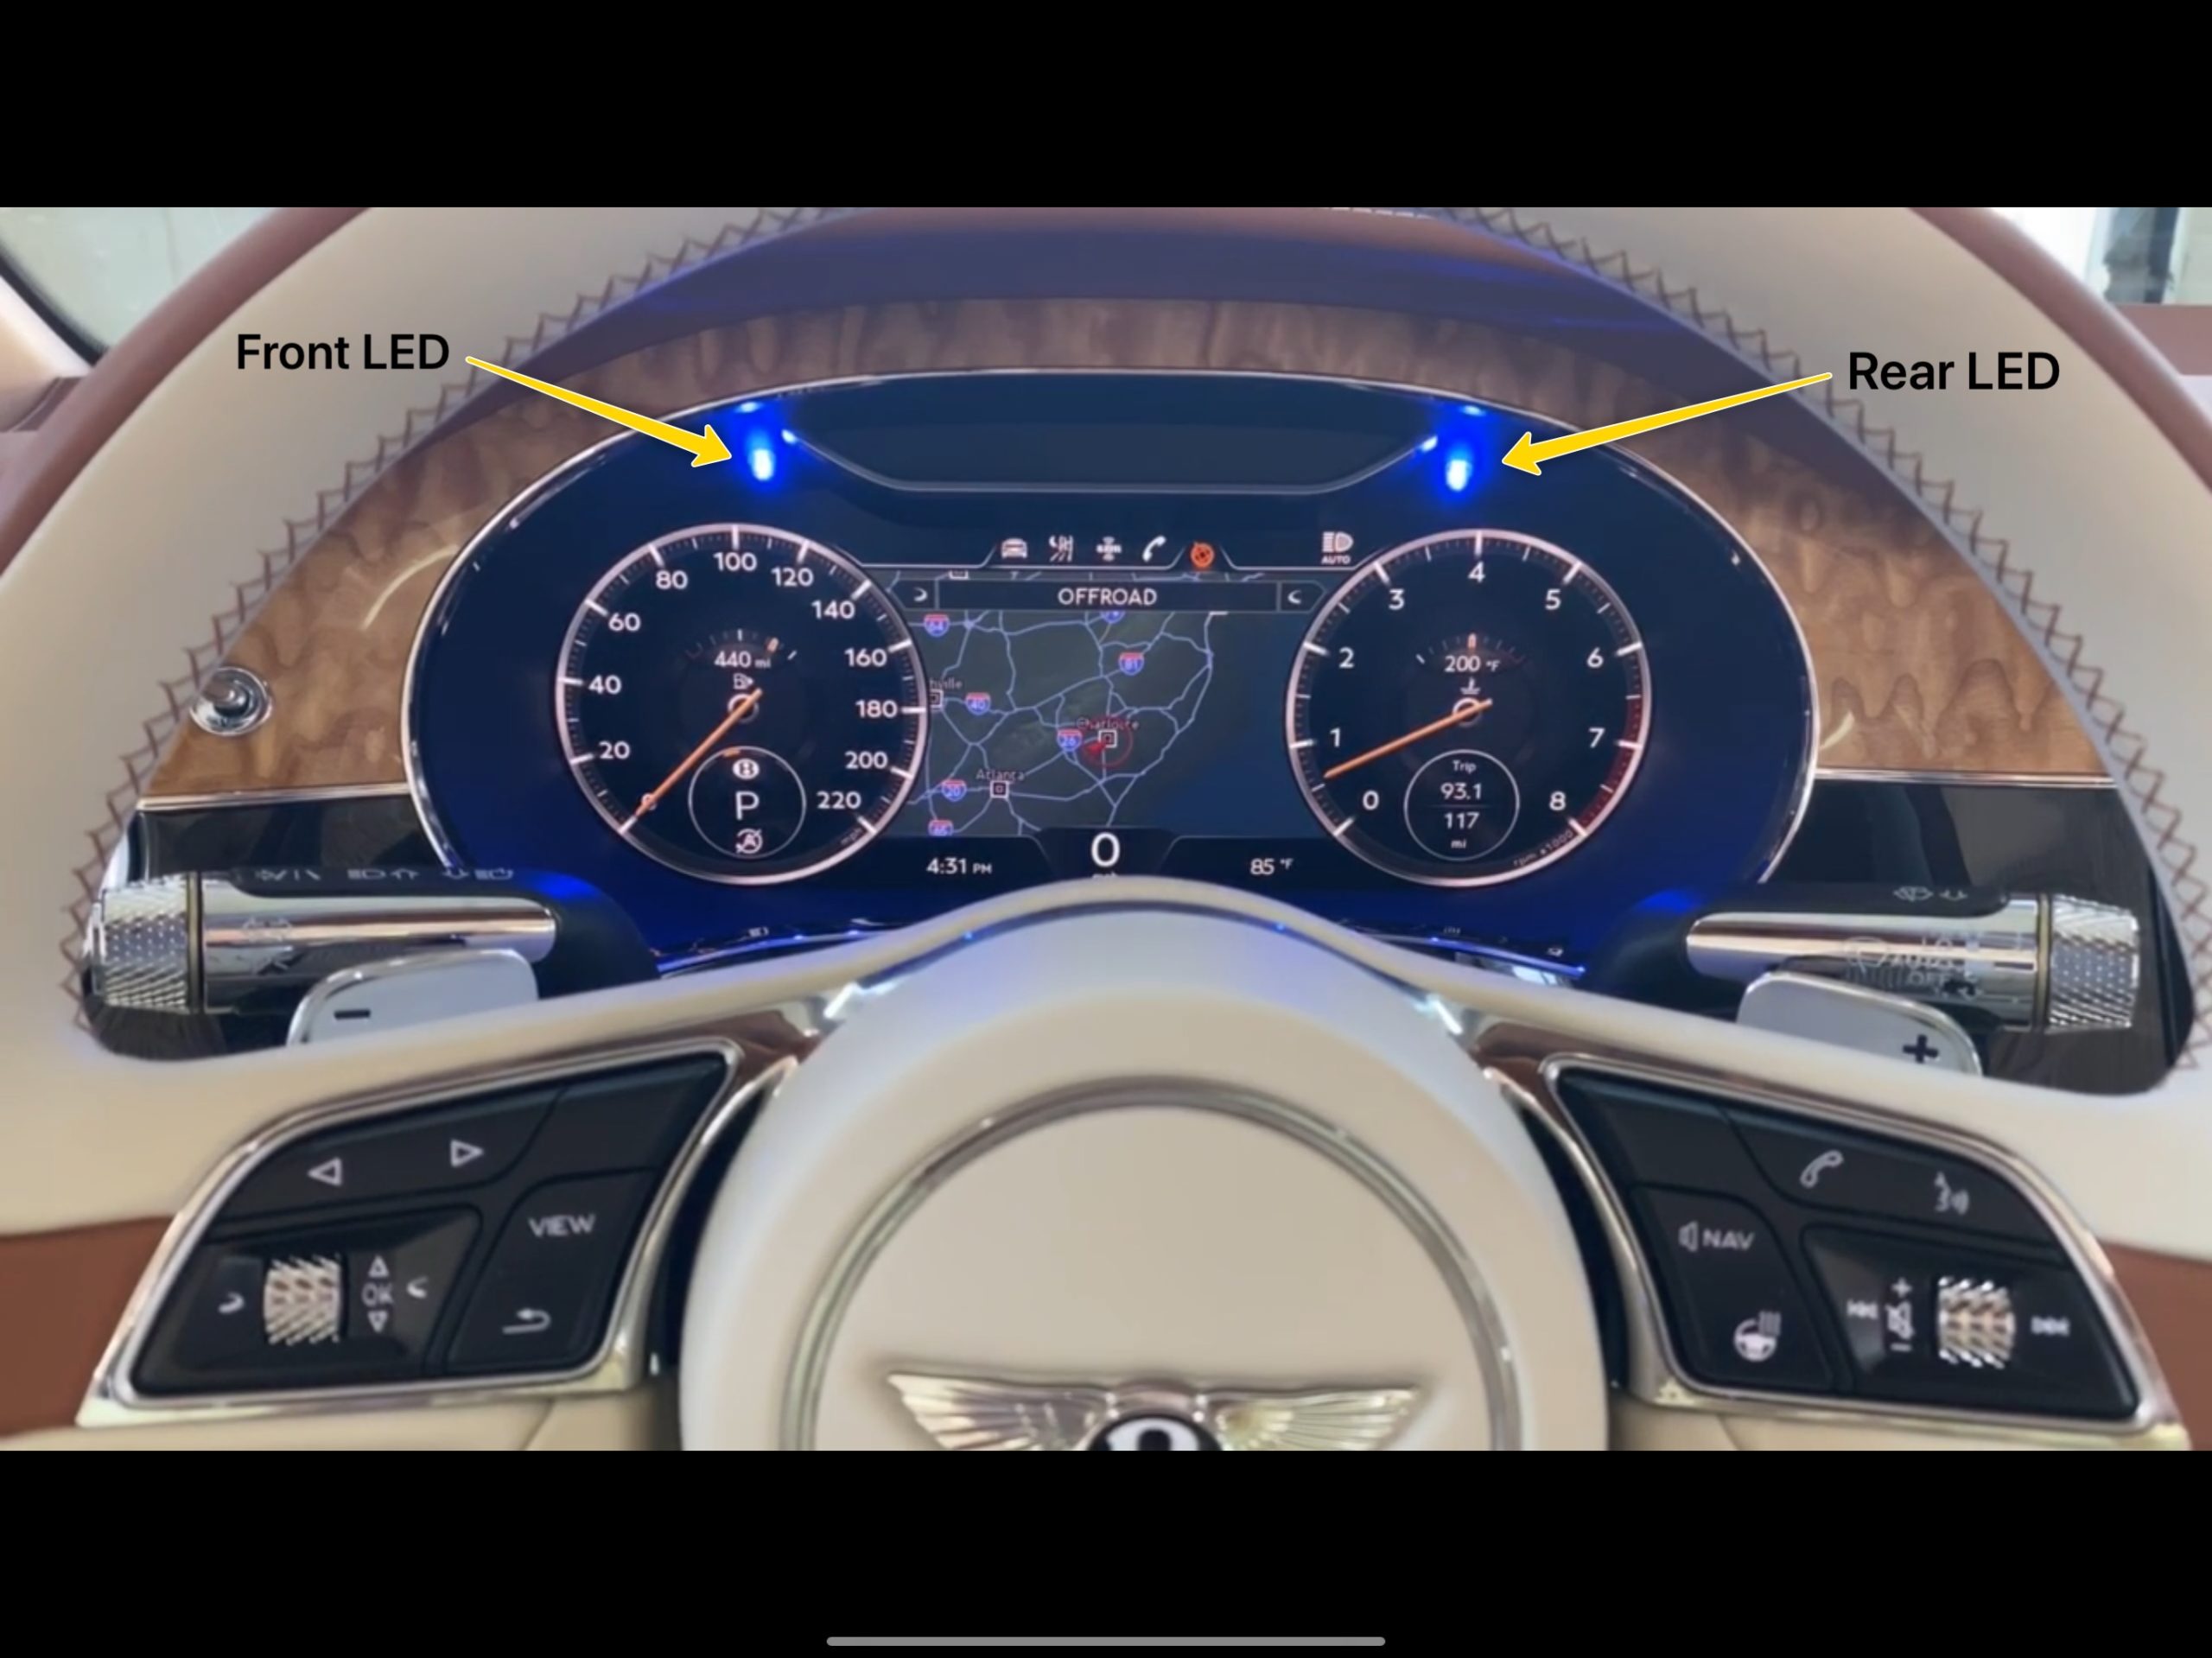 K40 radar detector alert leds on a 2020 Bentley Continental GT